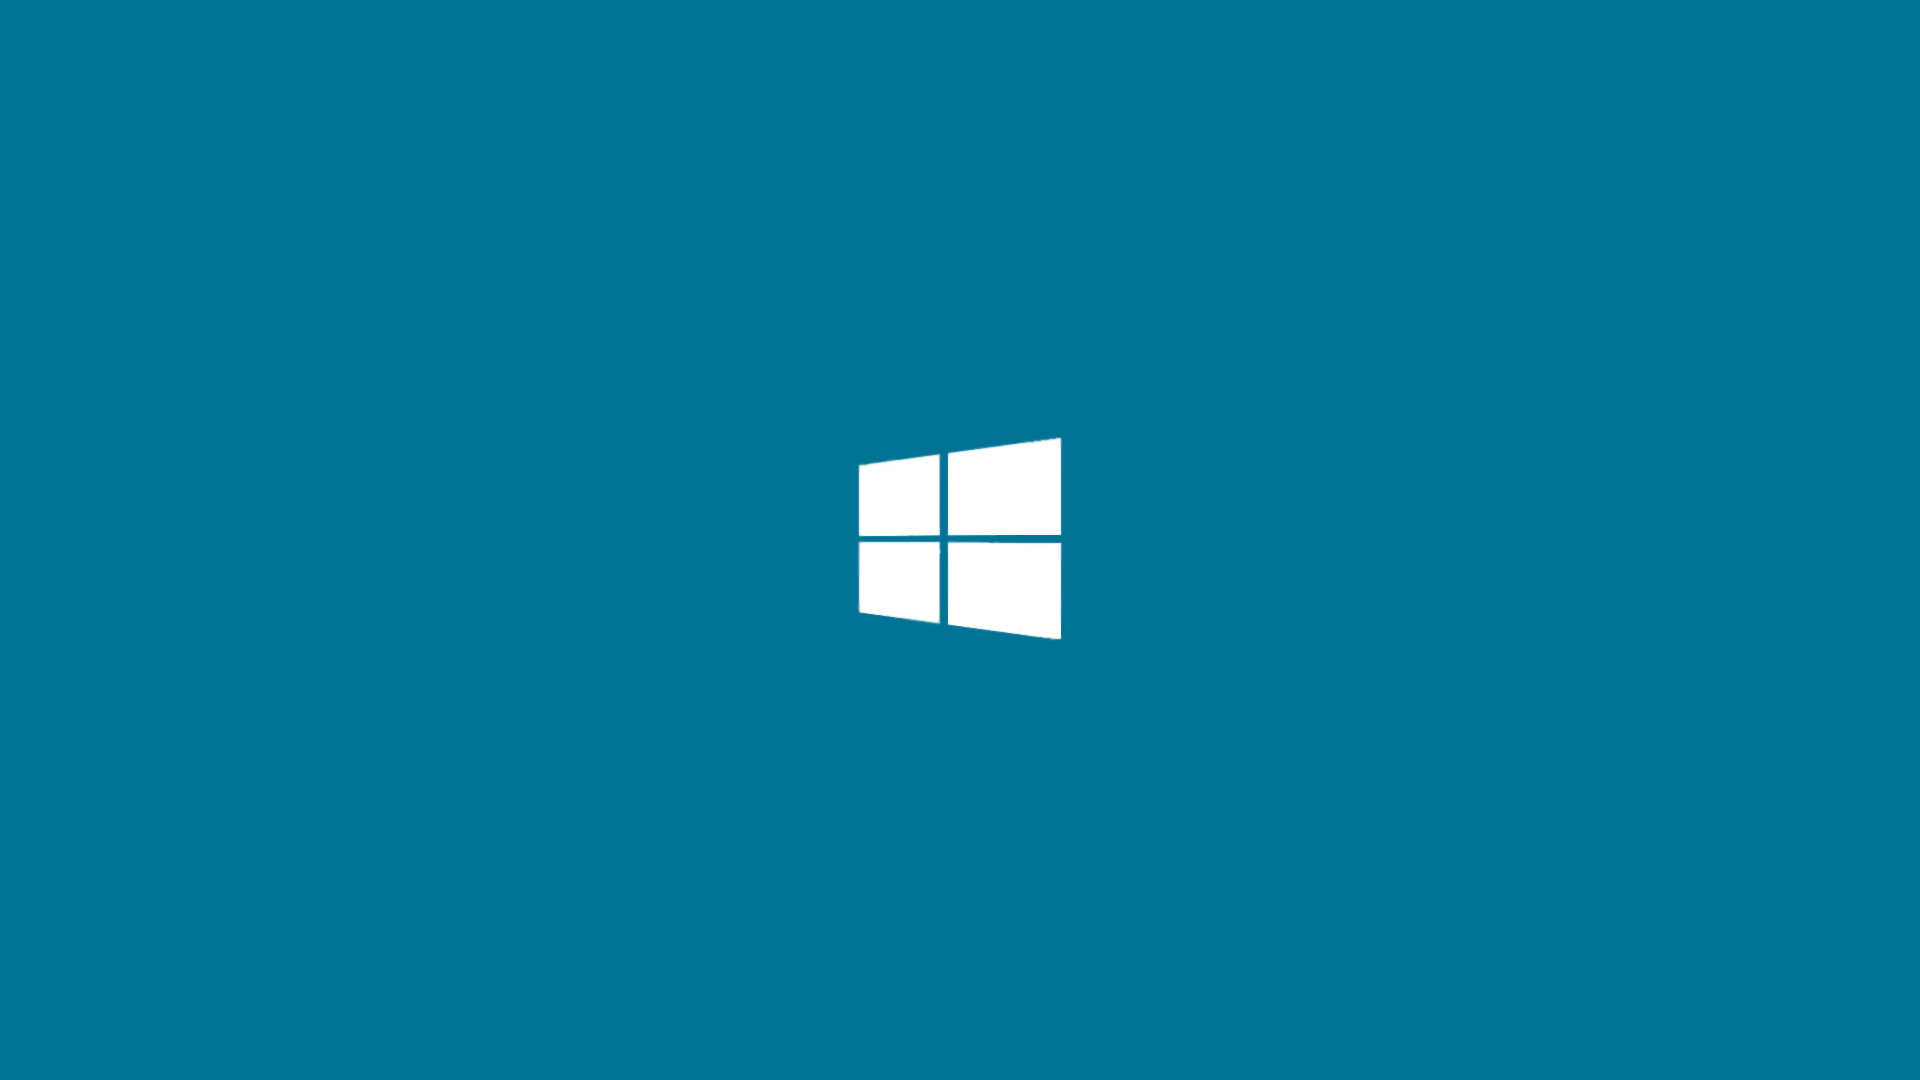 Microsoft Windows 8 Full HD Wallpaper 1262